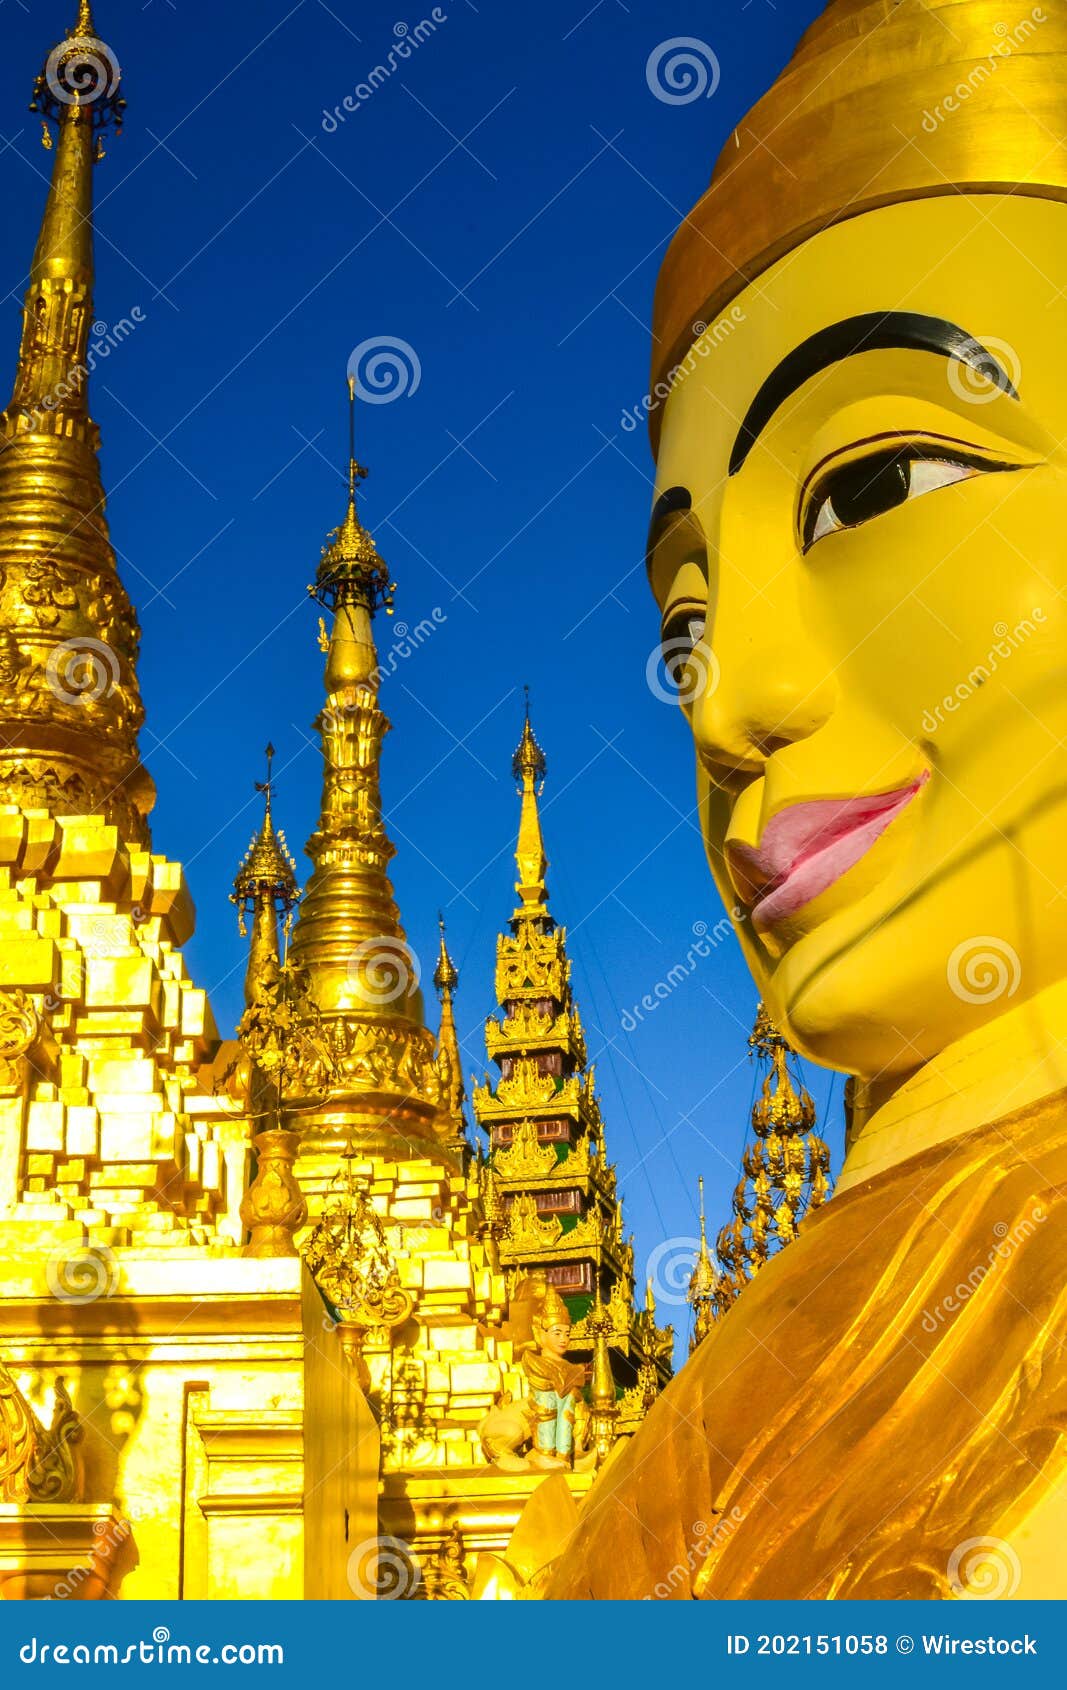 vertical shot of the big statue of gautama buddha in ngar htat gyi pagoda, yangon, myanmar